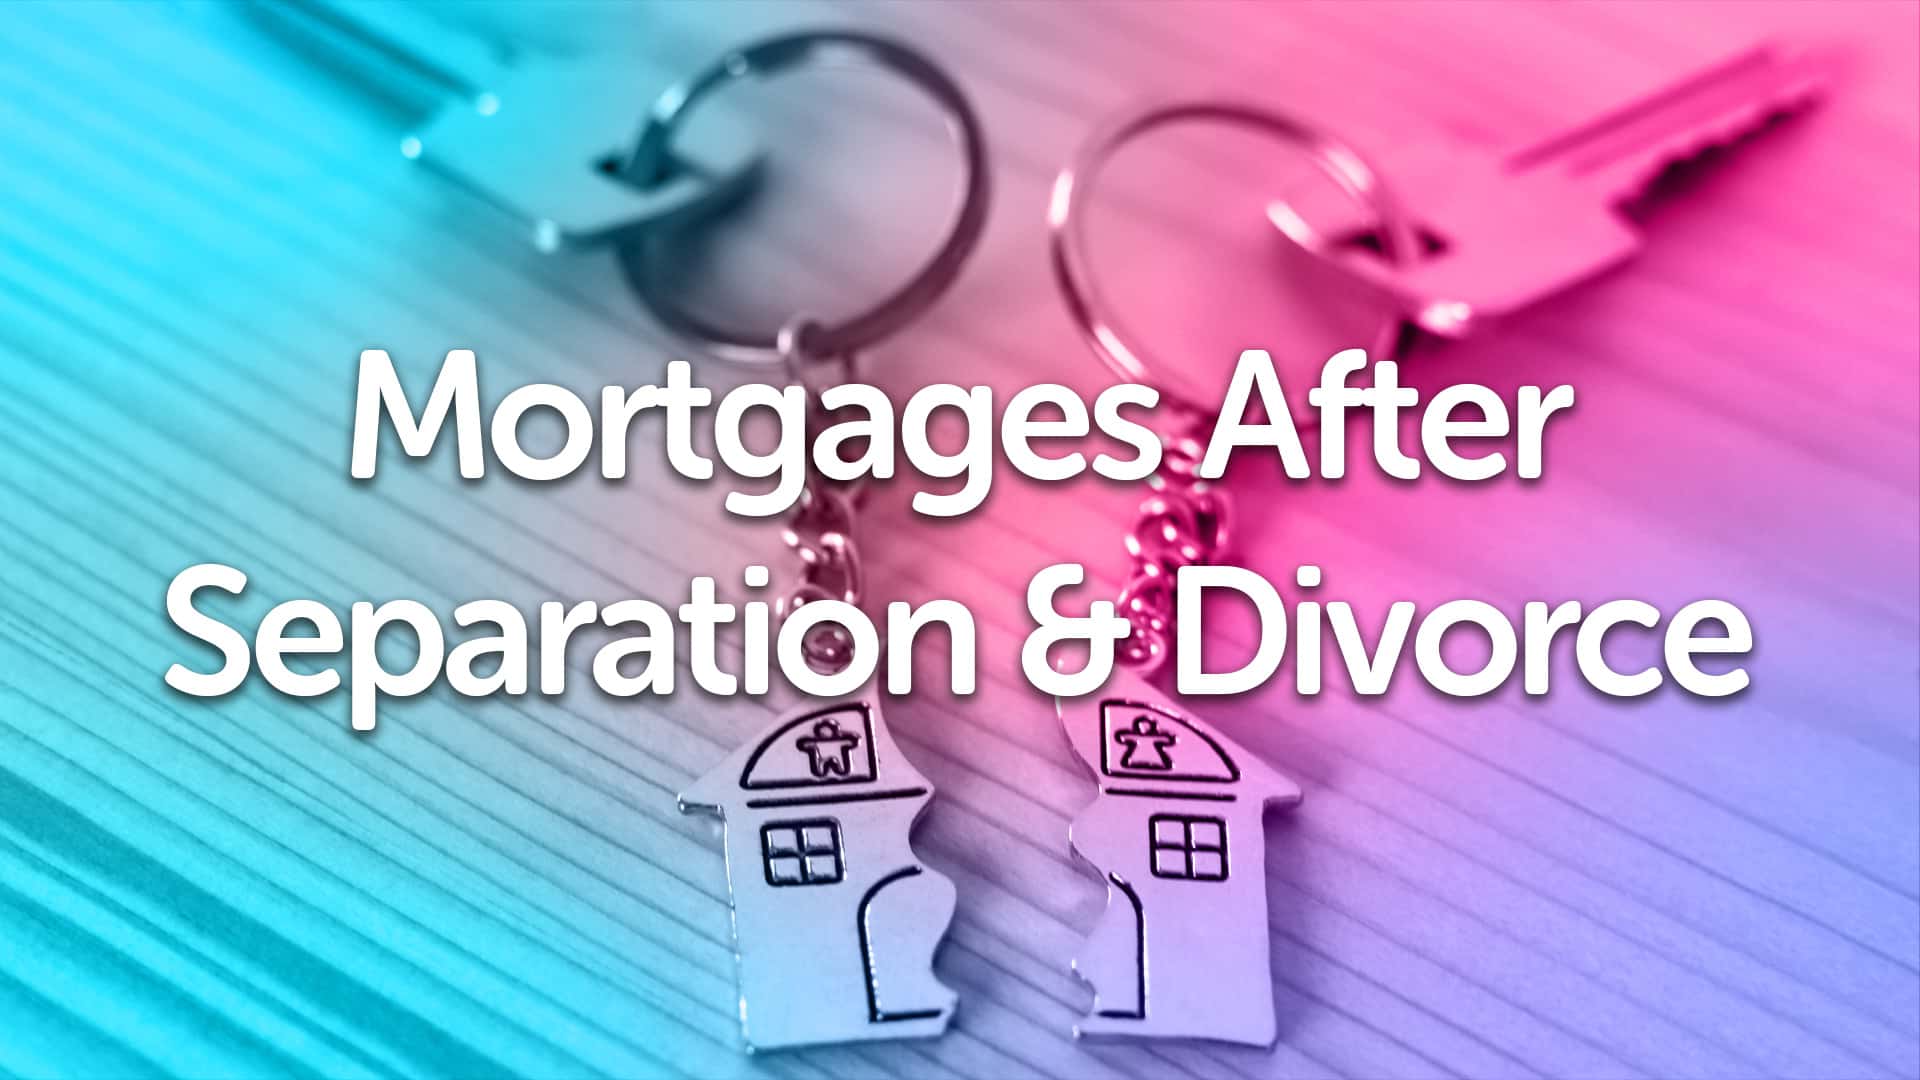 Divorce & Separation Mortgage Advice in Birmingham